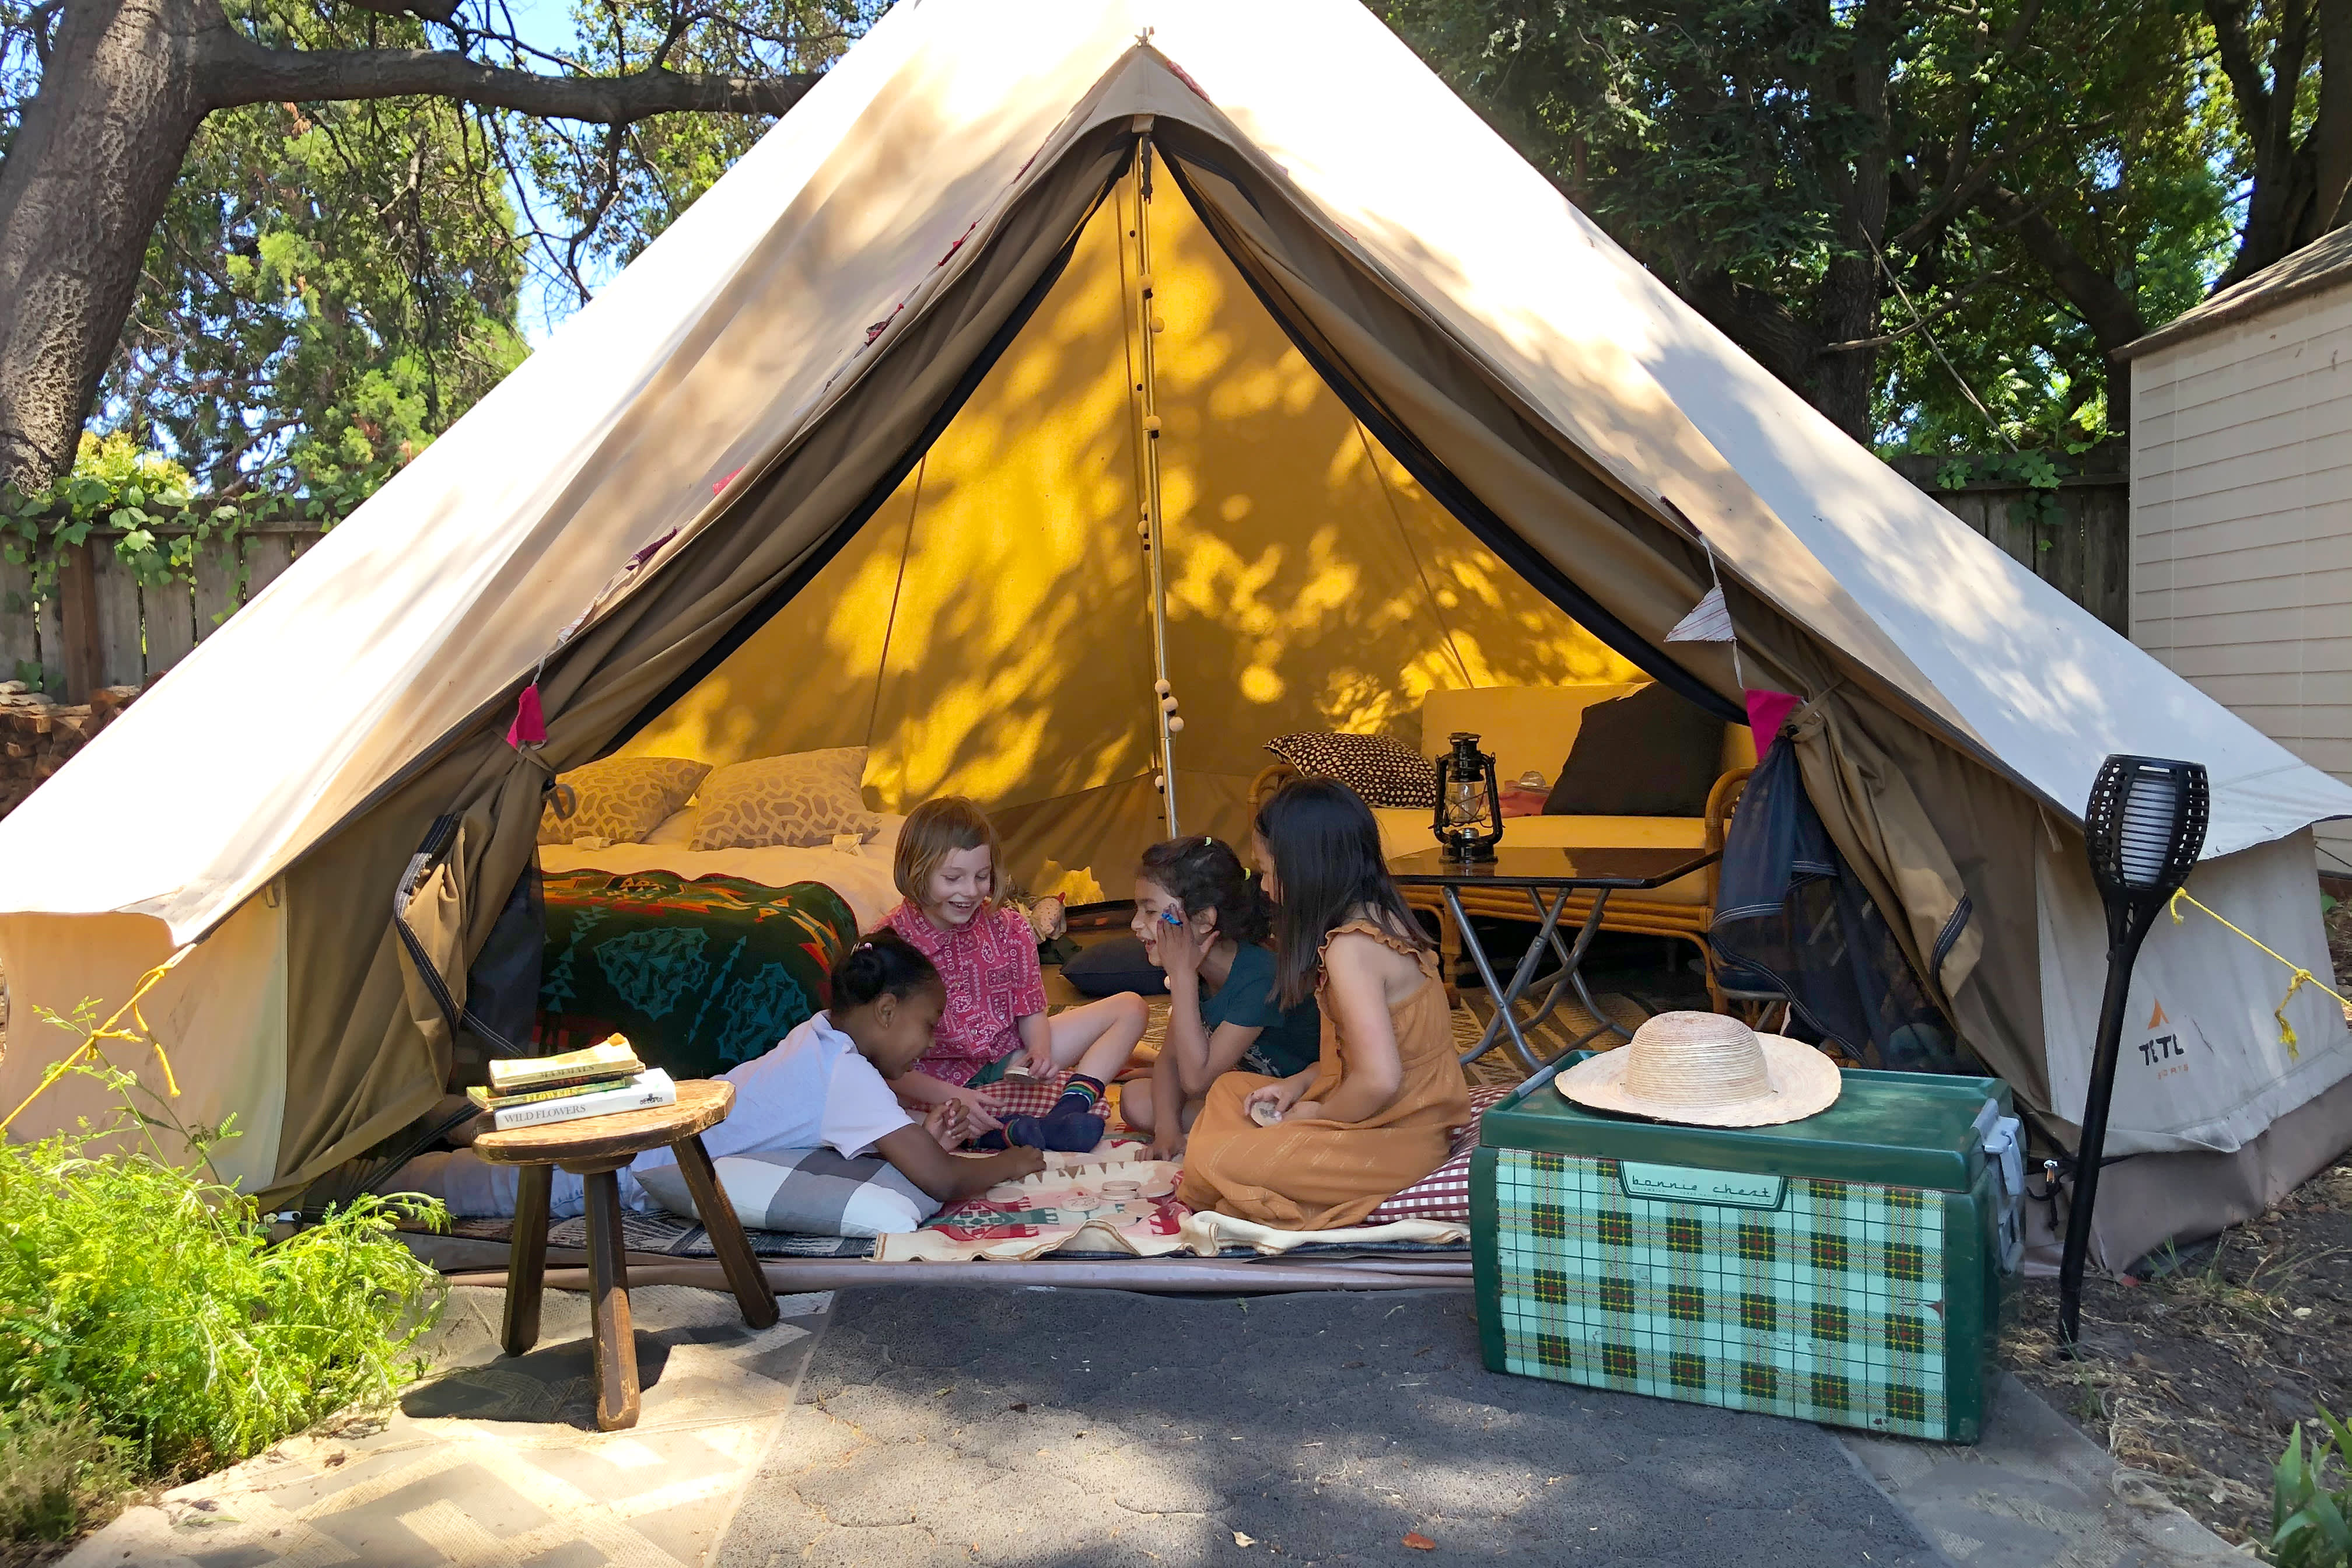 25 Family-Friendly Backyard Camping Ideas - Backyard Camping Tent